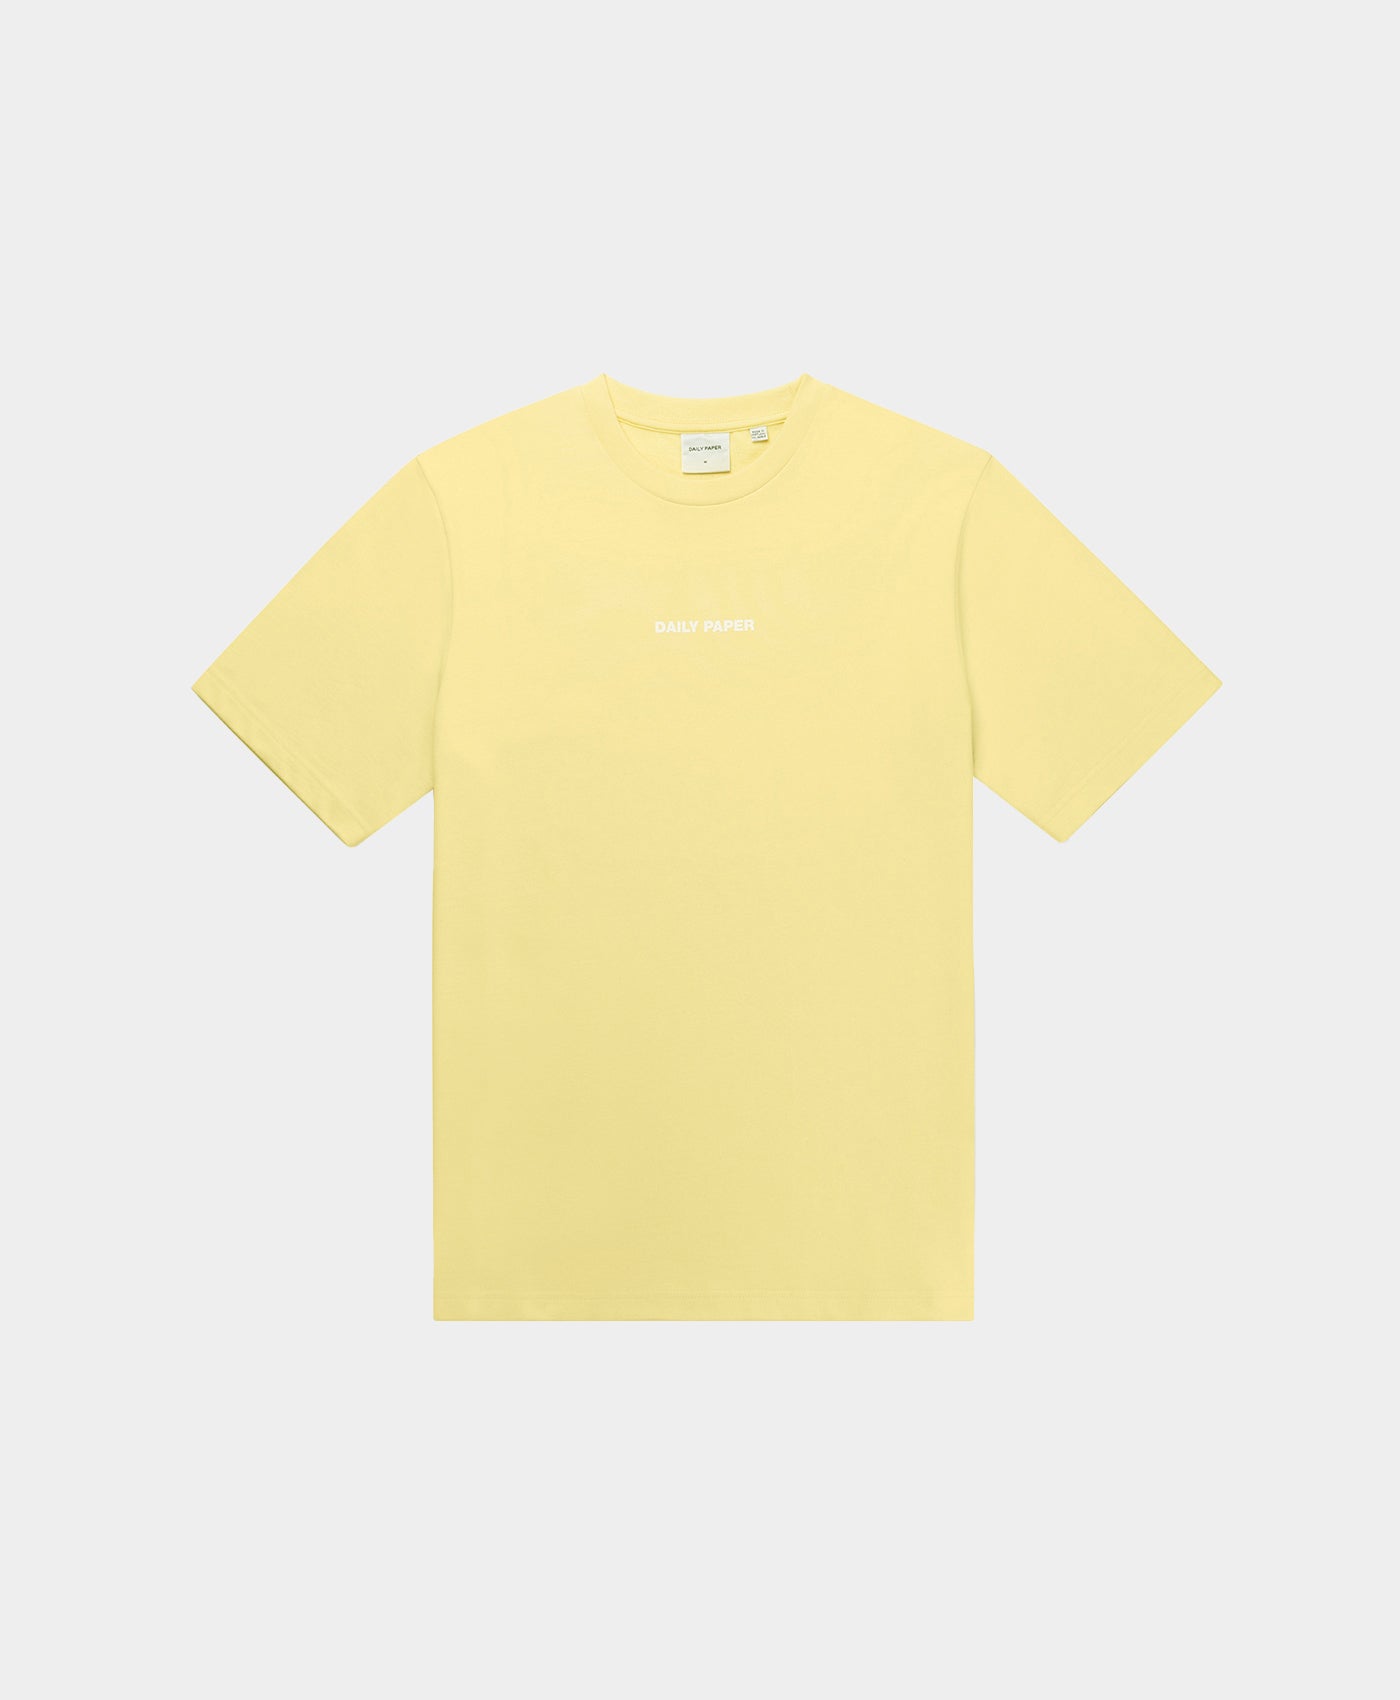 DP - Pineapple Yellow Refarid T-Shirt - Packshot - Front